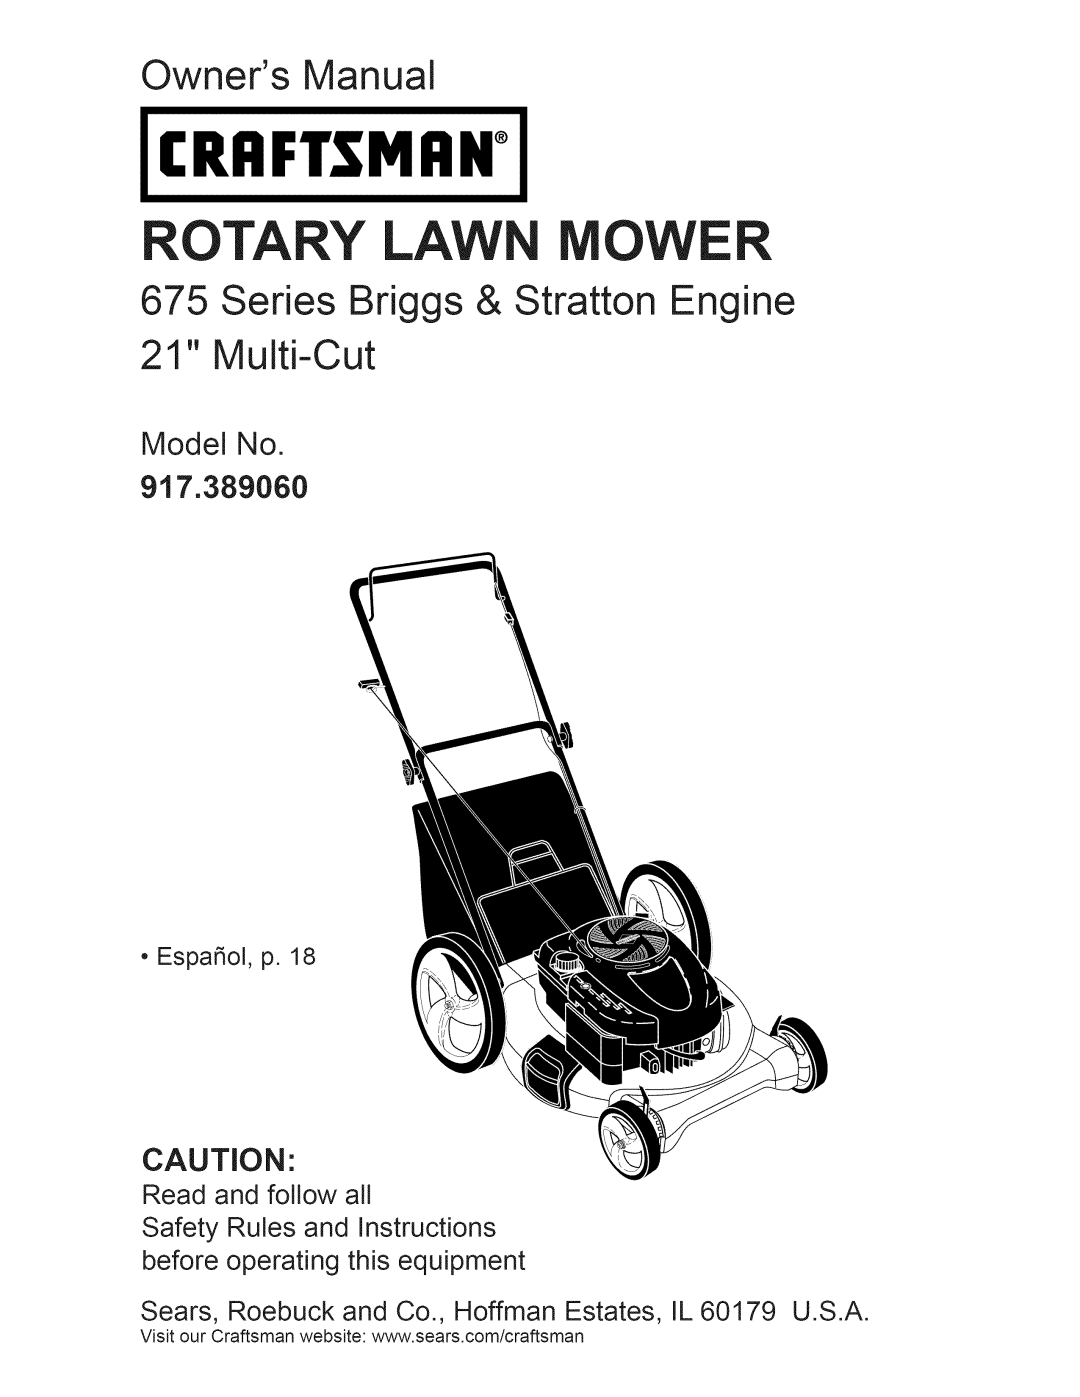 Craftsman manual Model No 917.389060, Craftsman, Rotary Lawn Mower, Owners Manual 